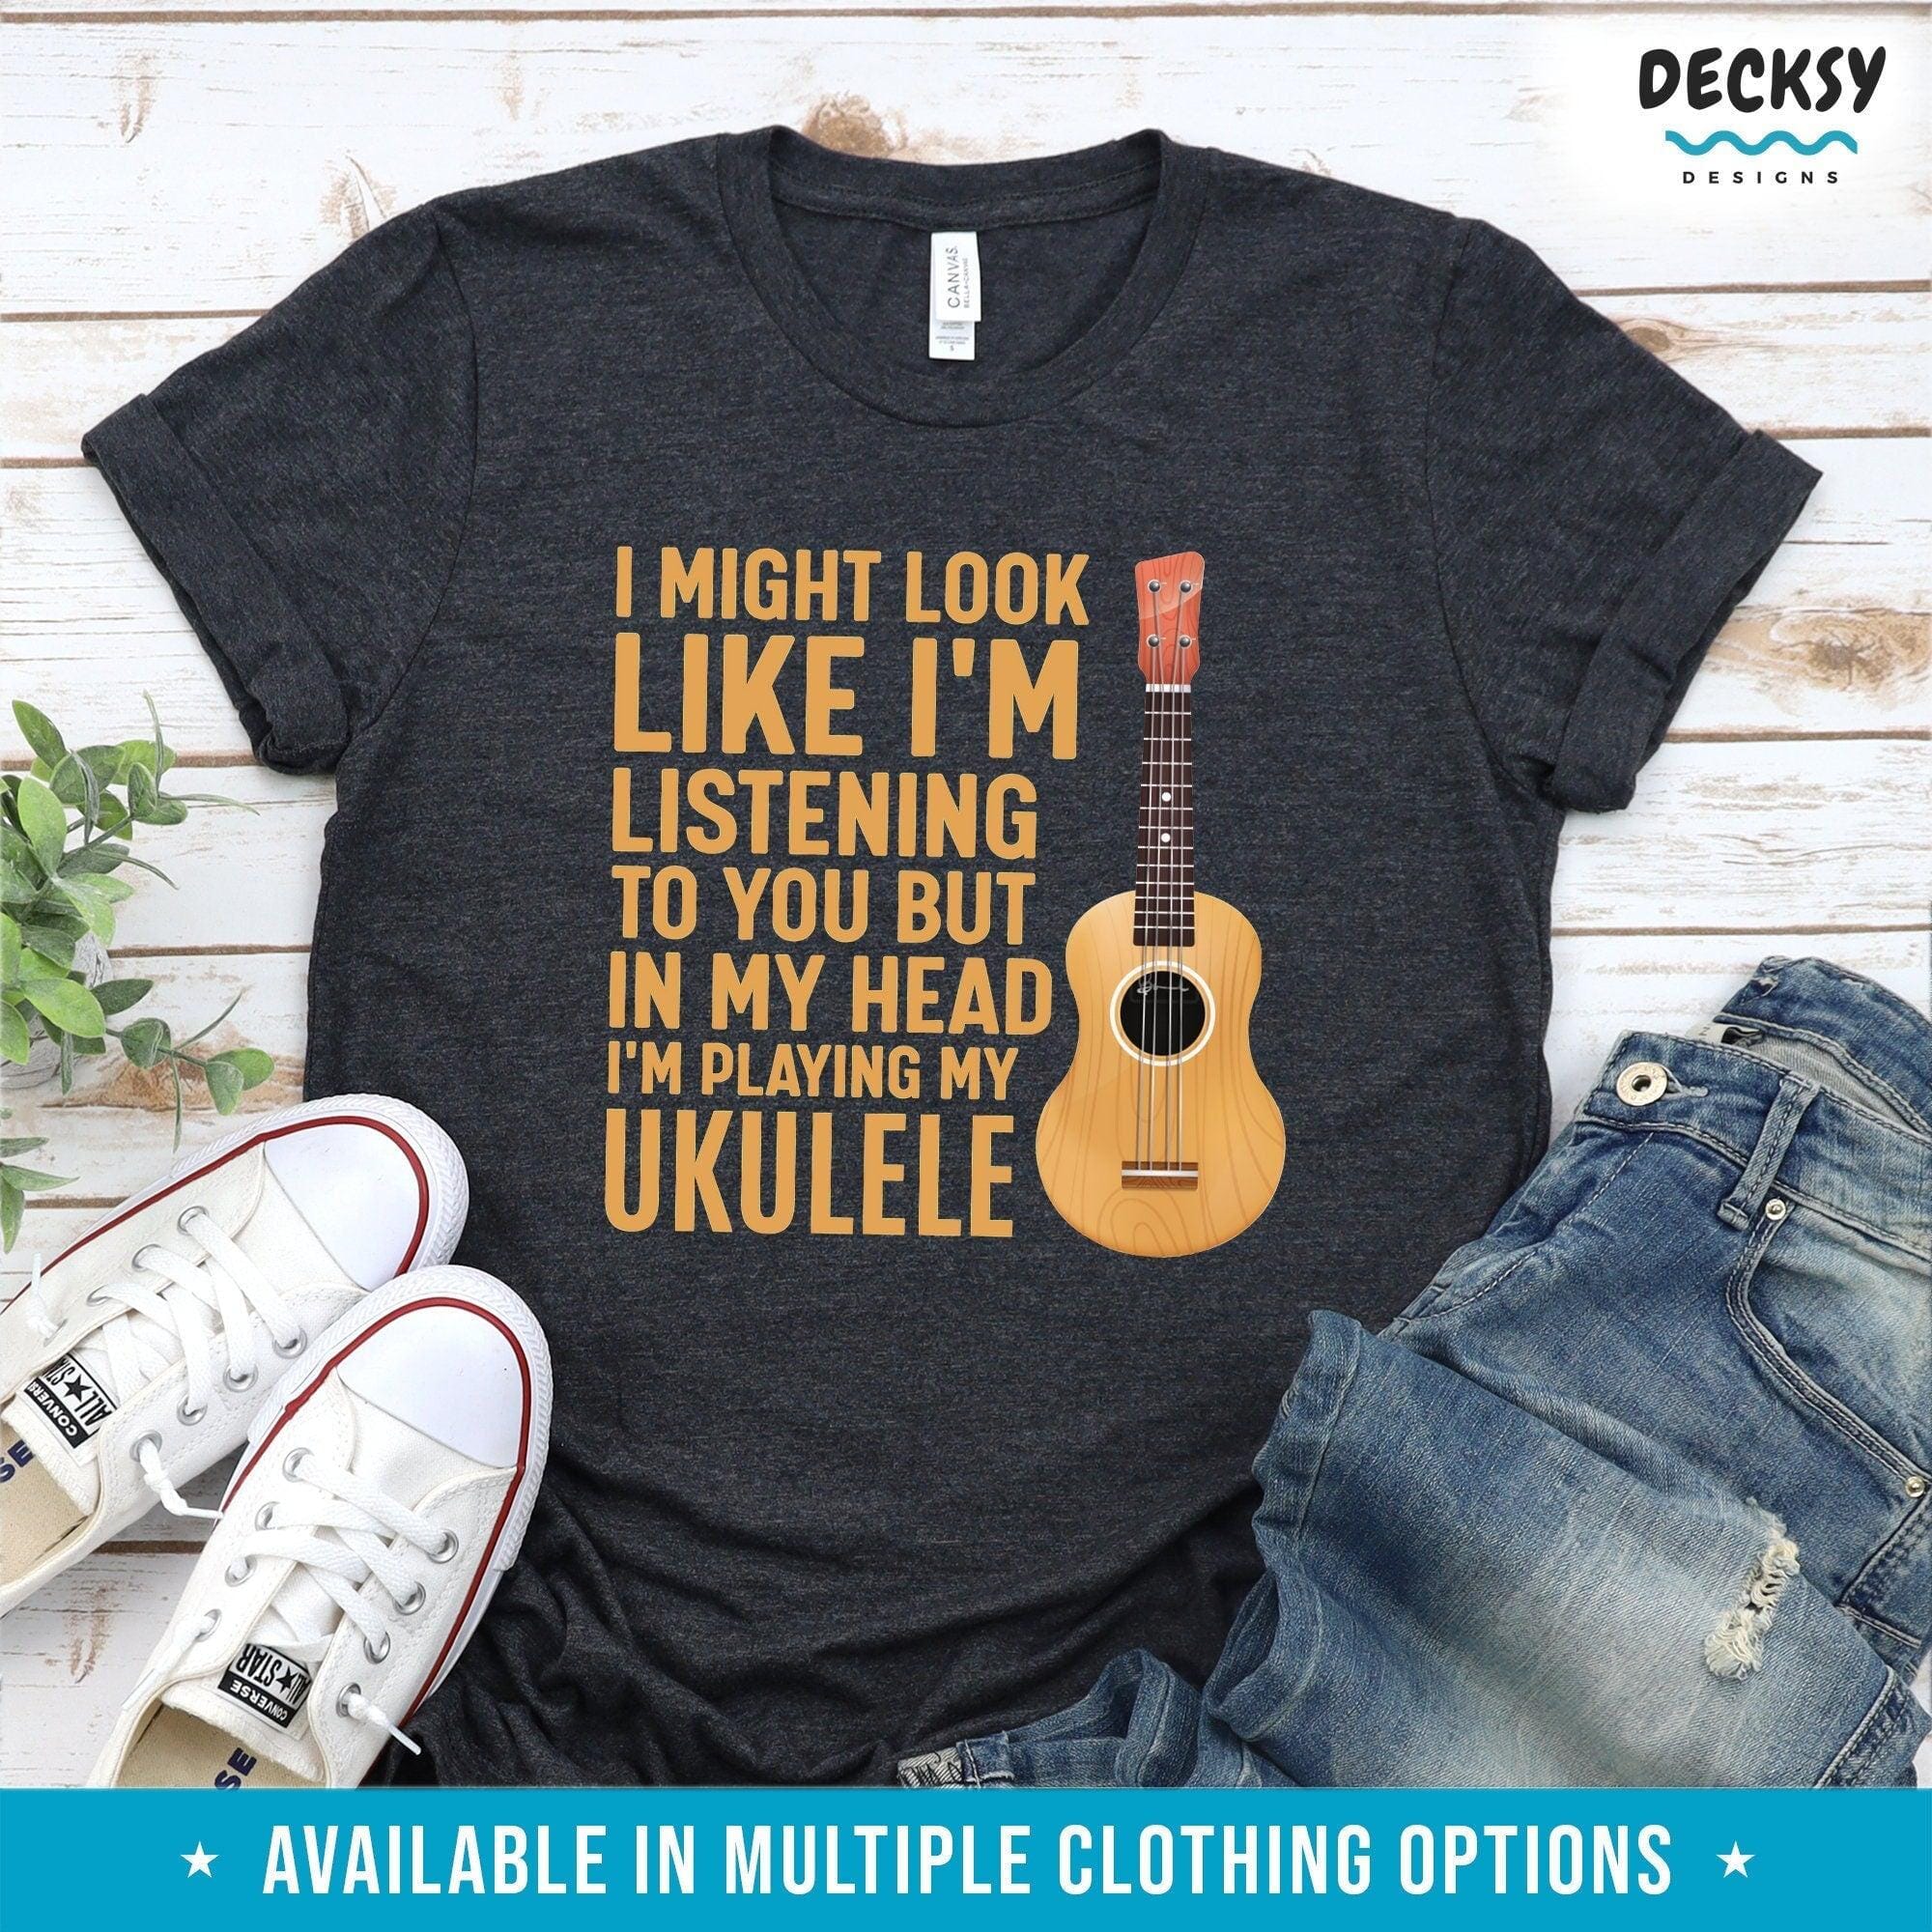 Ukulele Lover Shirt, Ukulele Player Gift-Clothing:Gender-Neutral Adult Clothing:Tops & Tees:T-shirts:Graphic Tees-DecksyDesigns